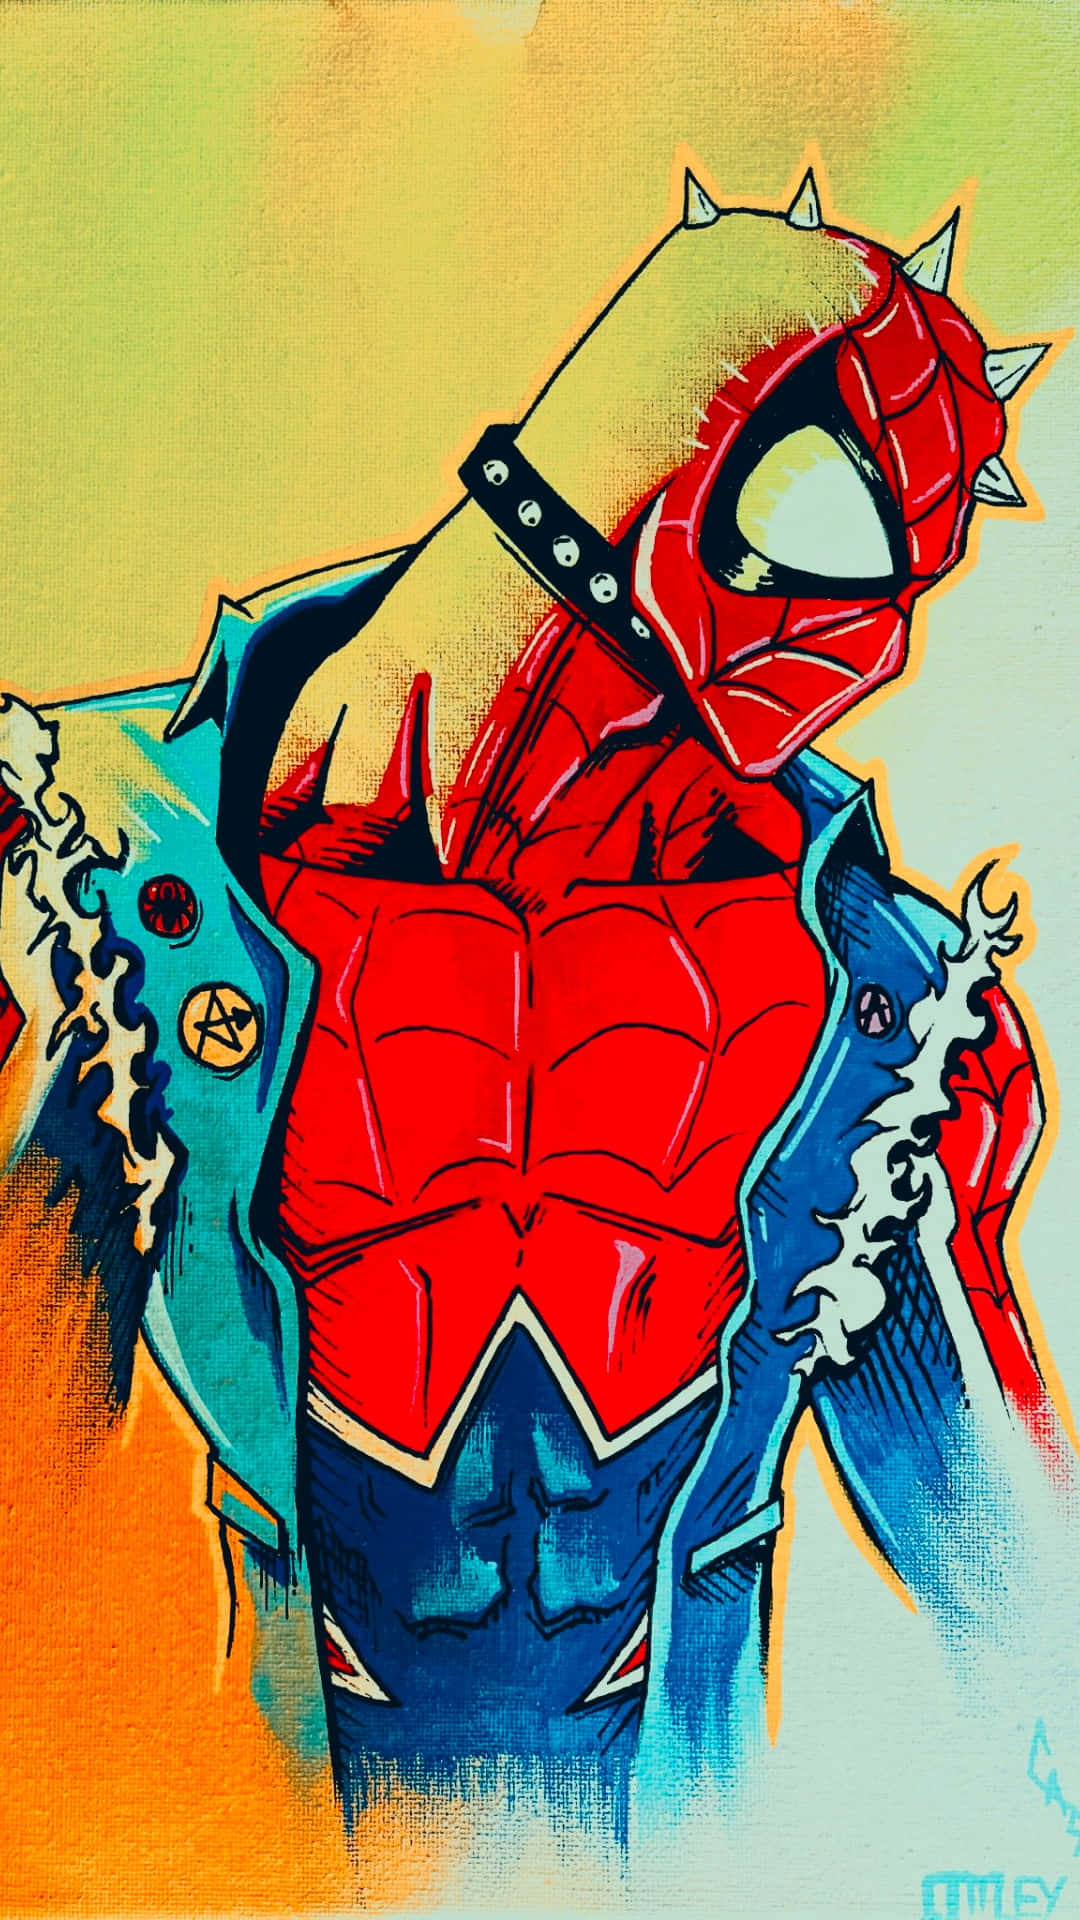 Colorful Spider Man Artwork Wallpaper